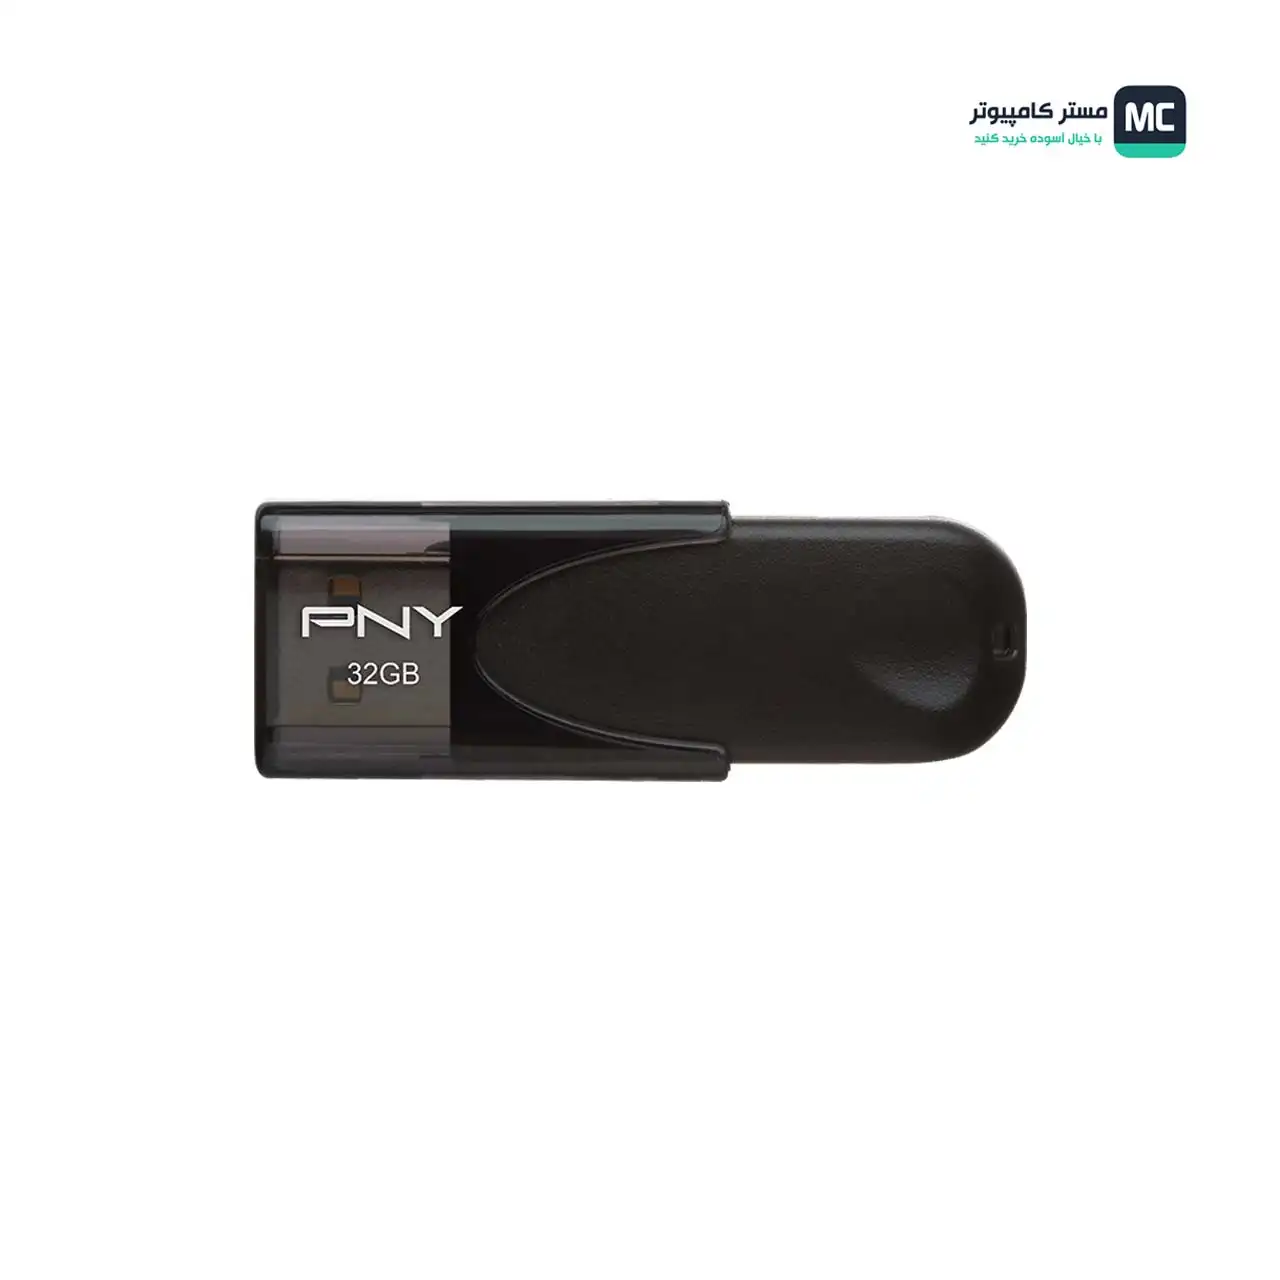 PNY Attache 4 USB 2.0 32GB Black Main Photo